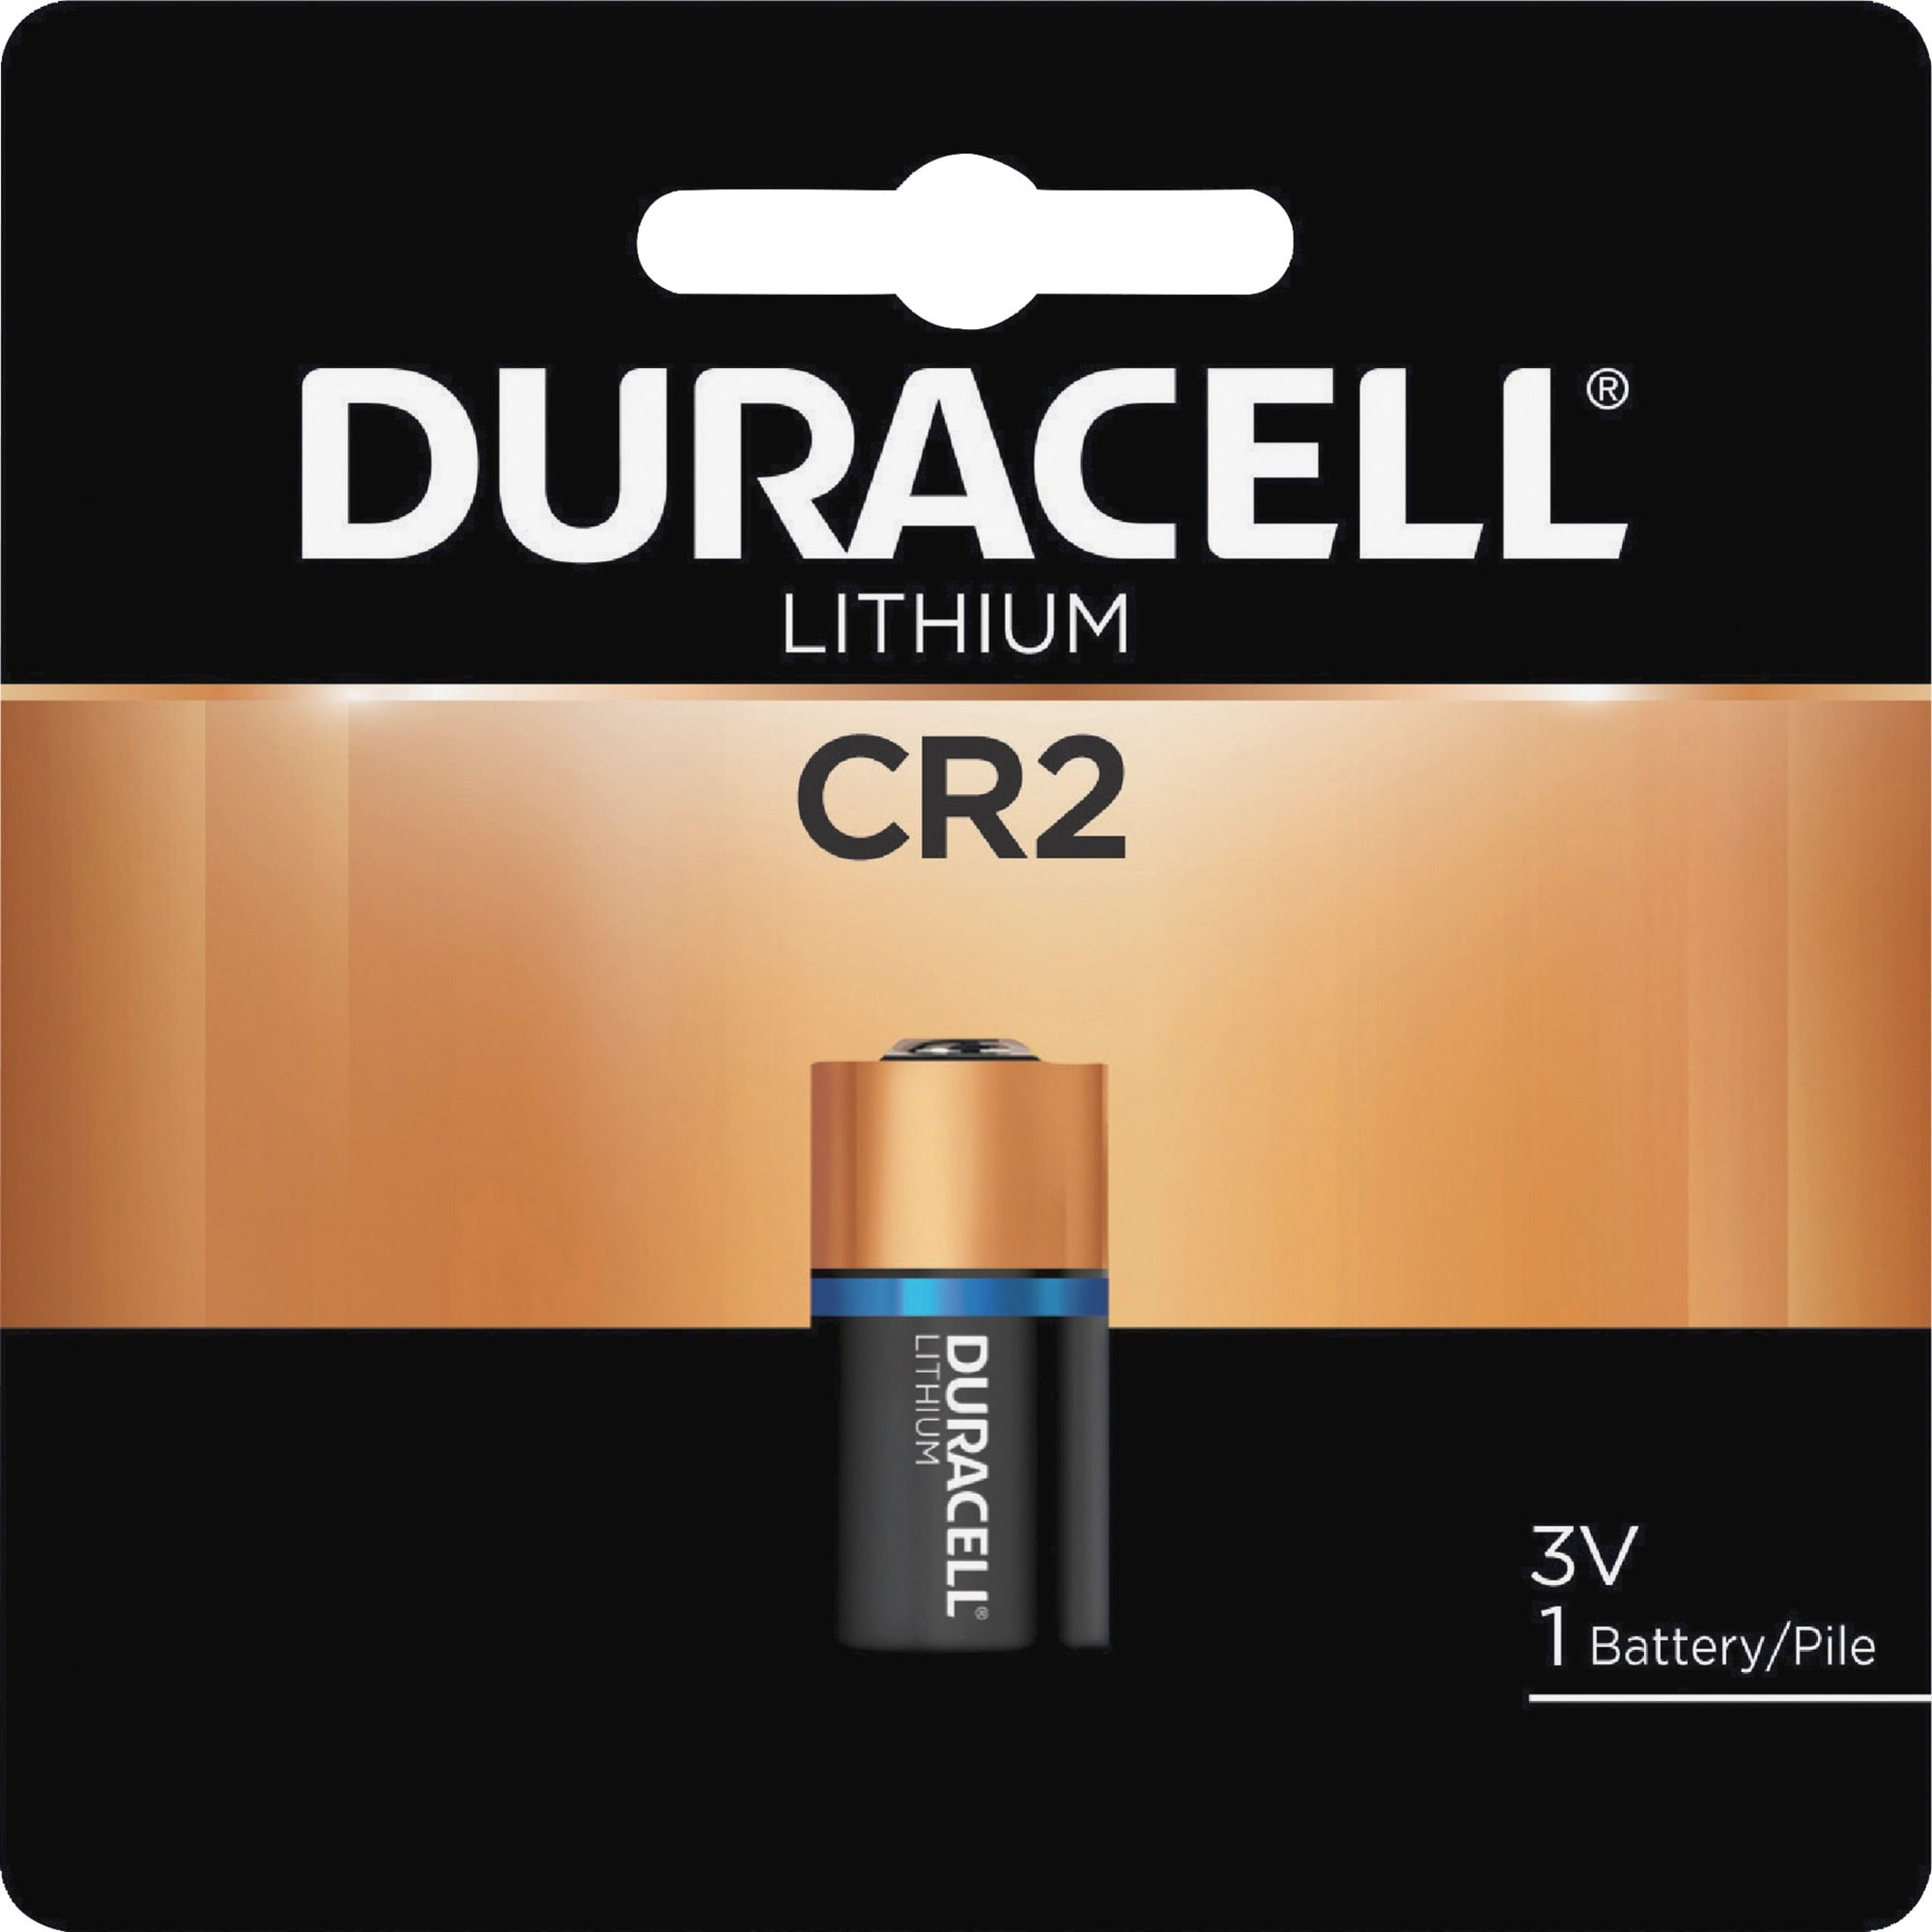 Duracell Lithium CR2 Battery - Walmart.com